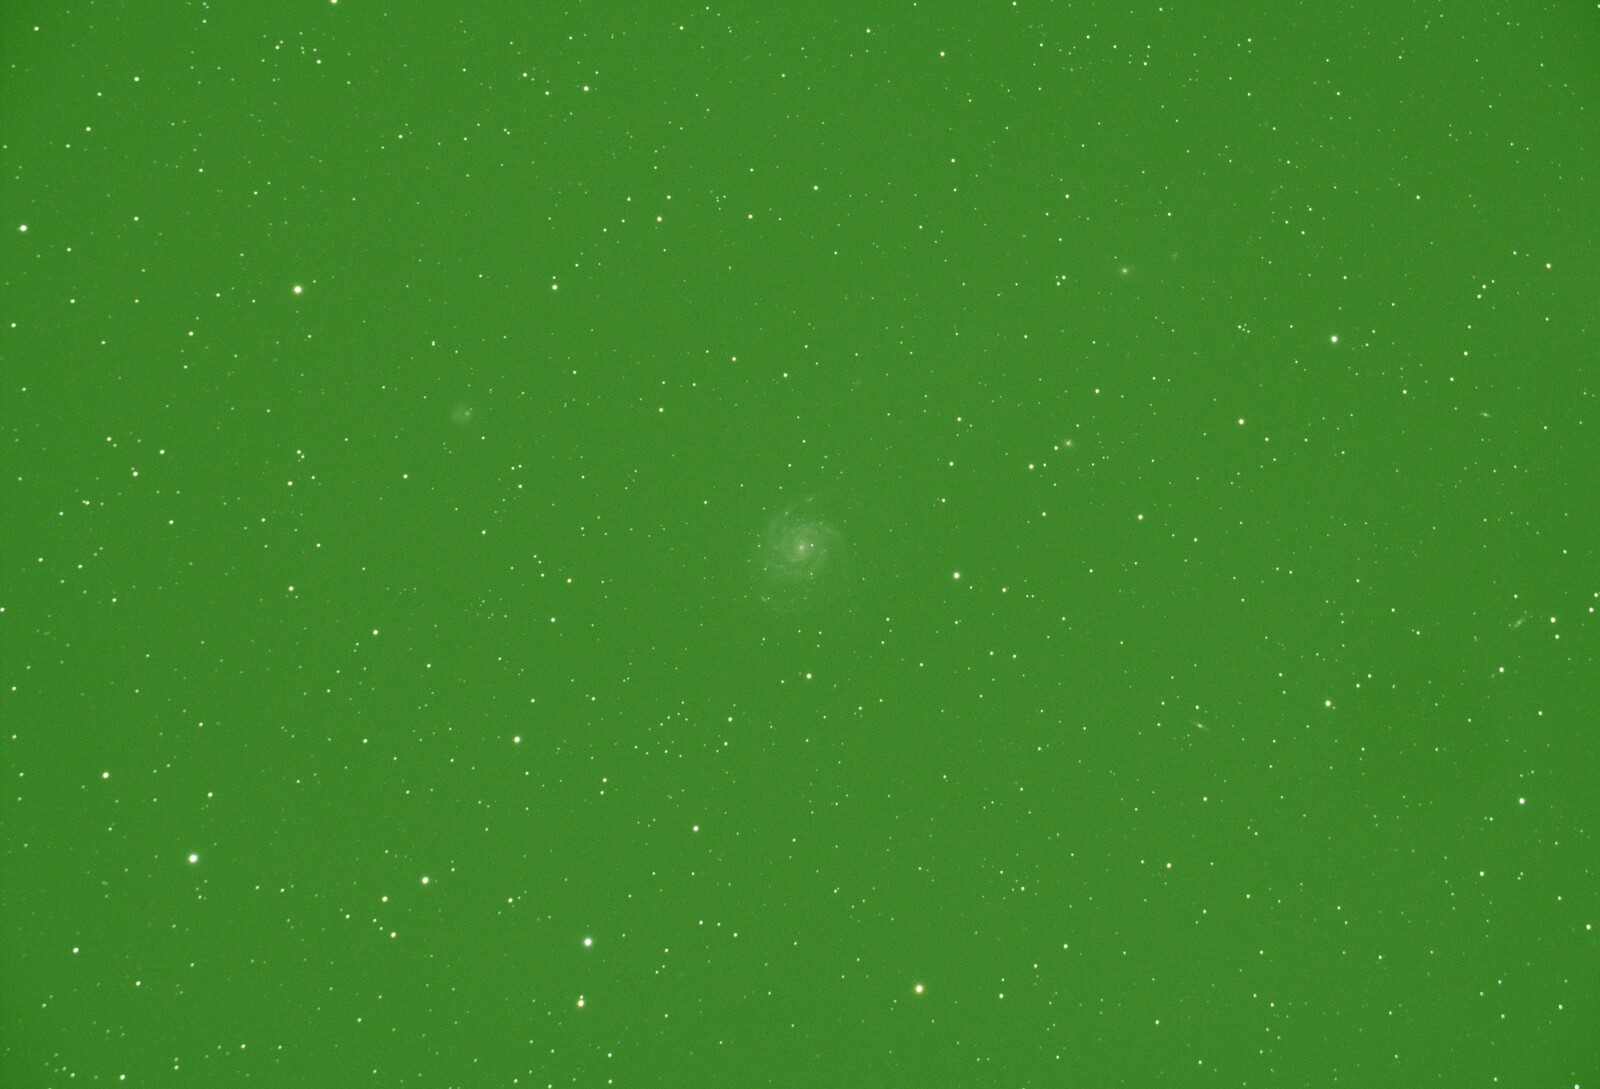 Light M101 180.0s Bin1 0007 St